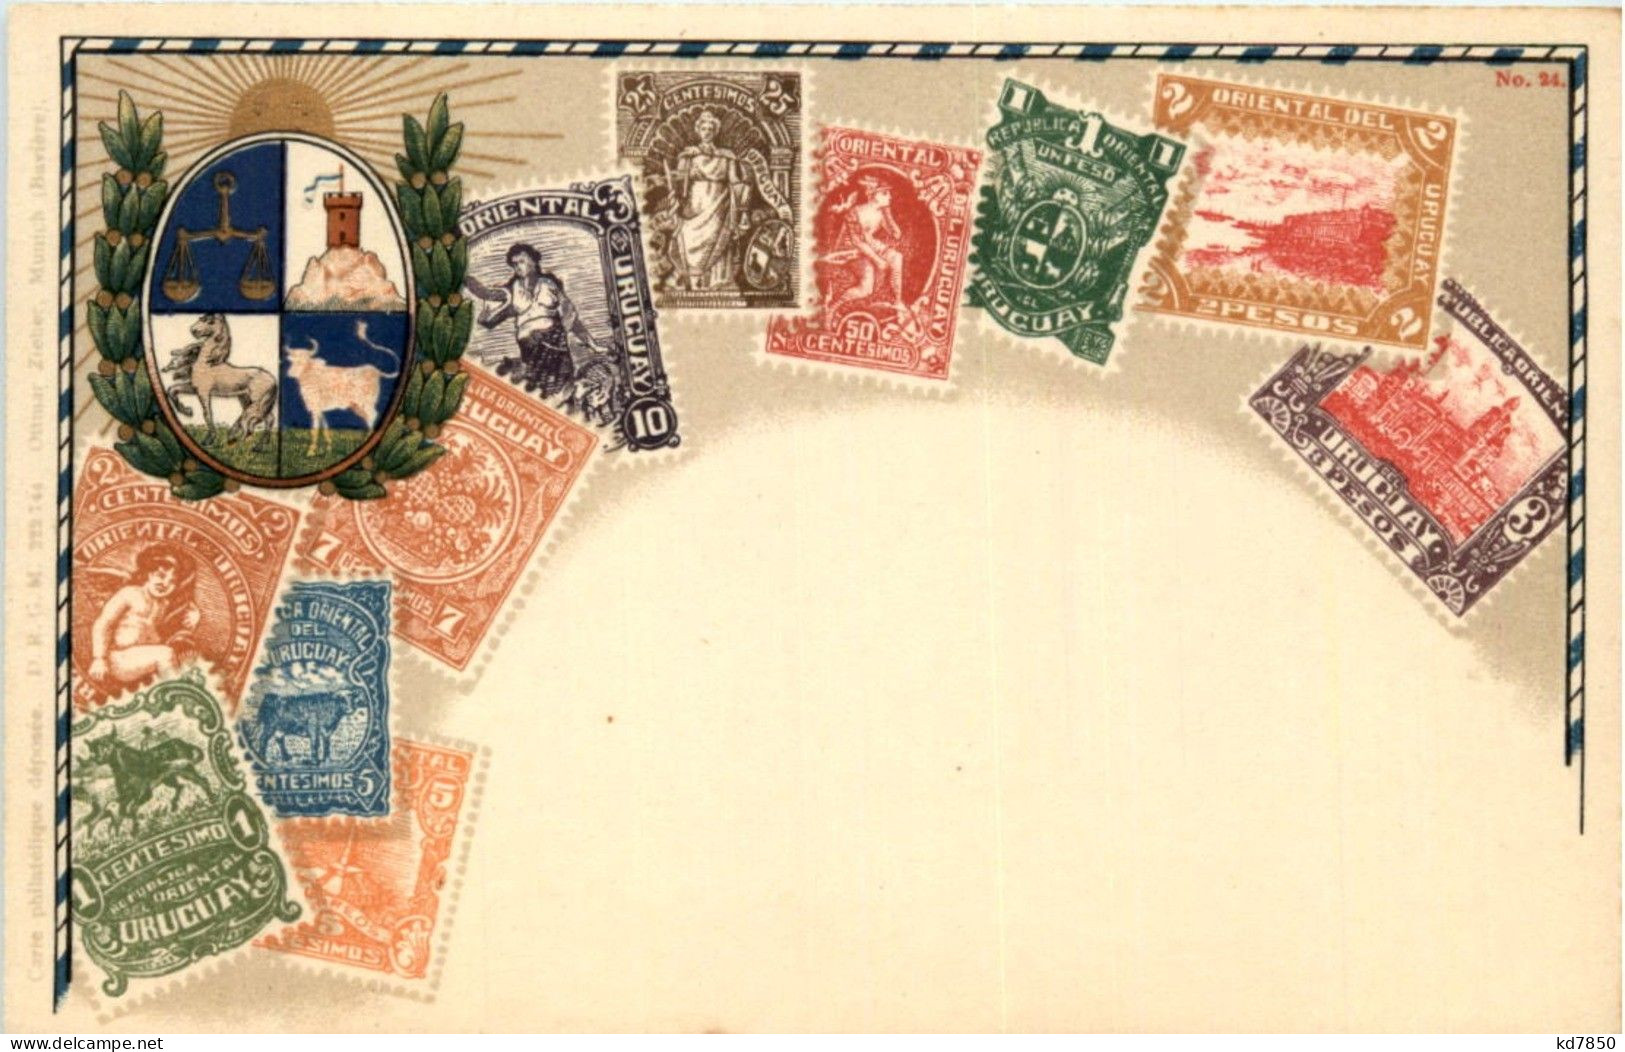 Uruquay - Briefmarken - Litho - Francobolli (rappresentazioni)